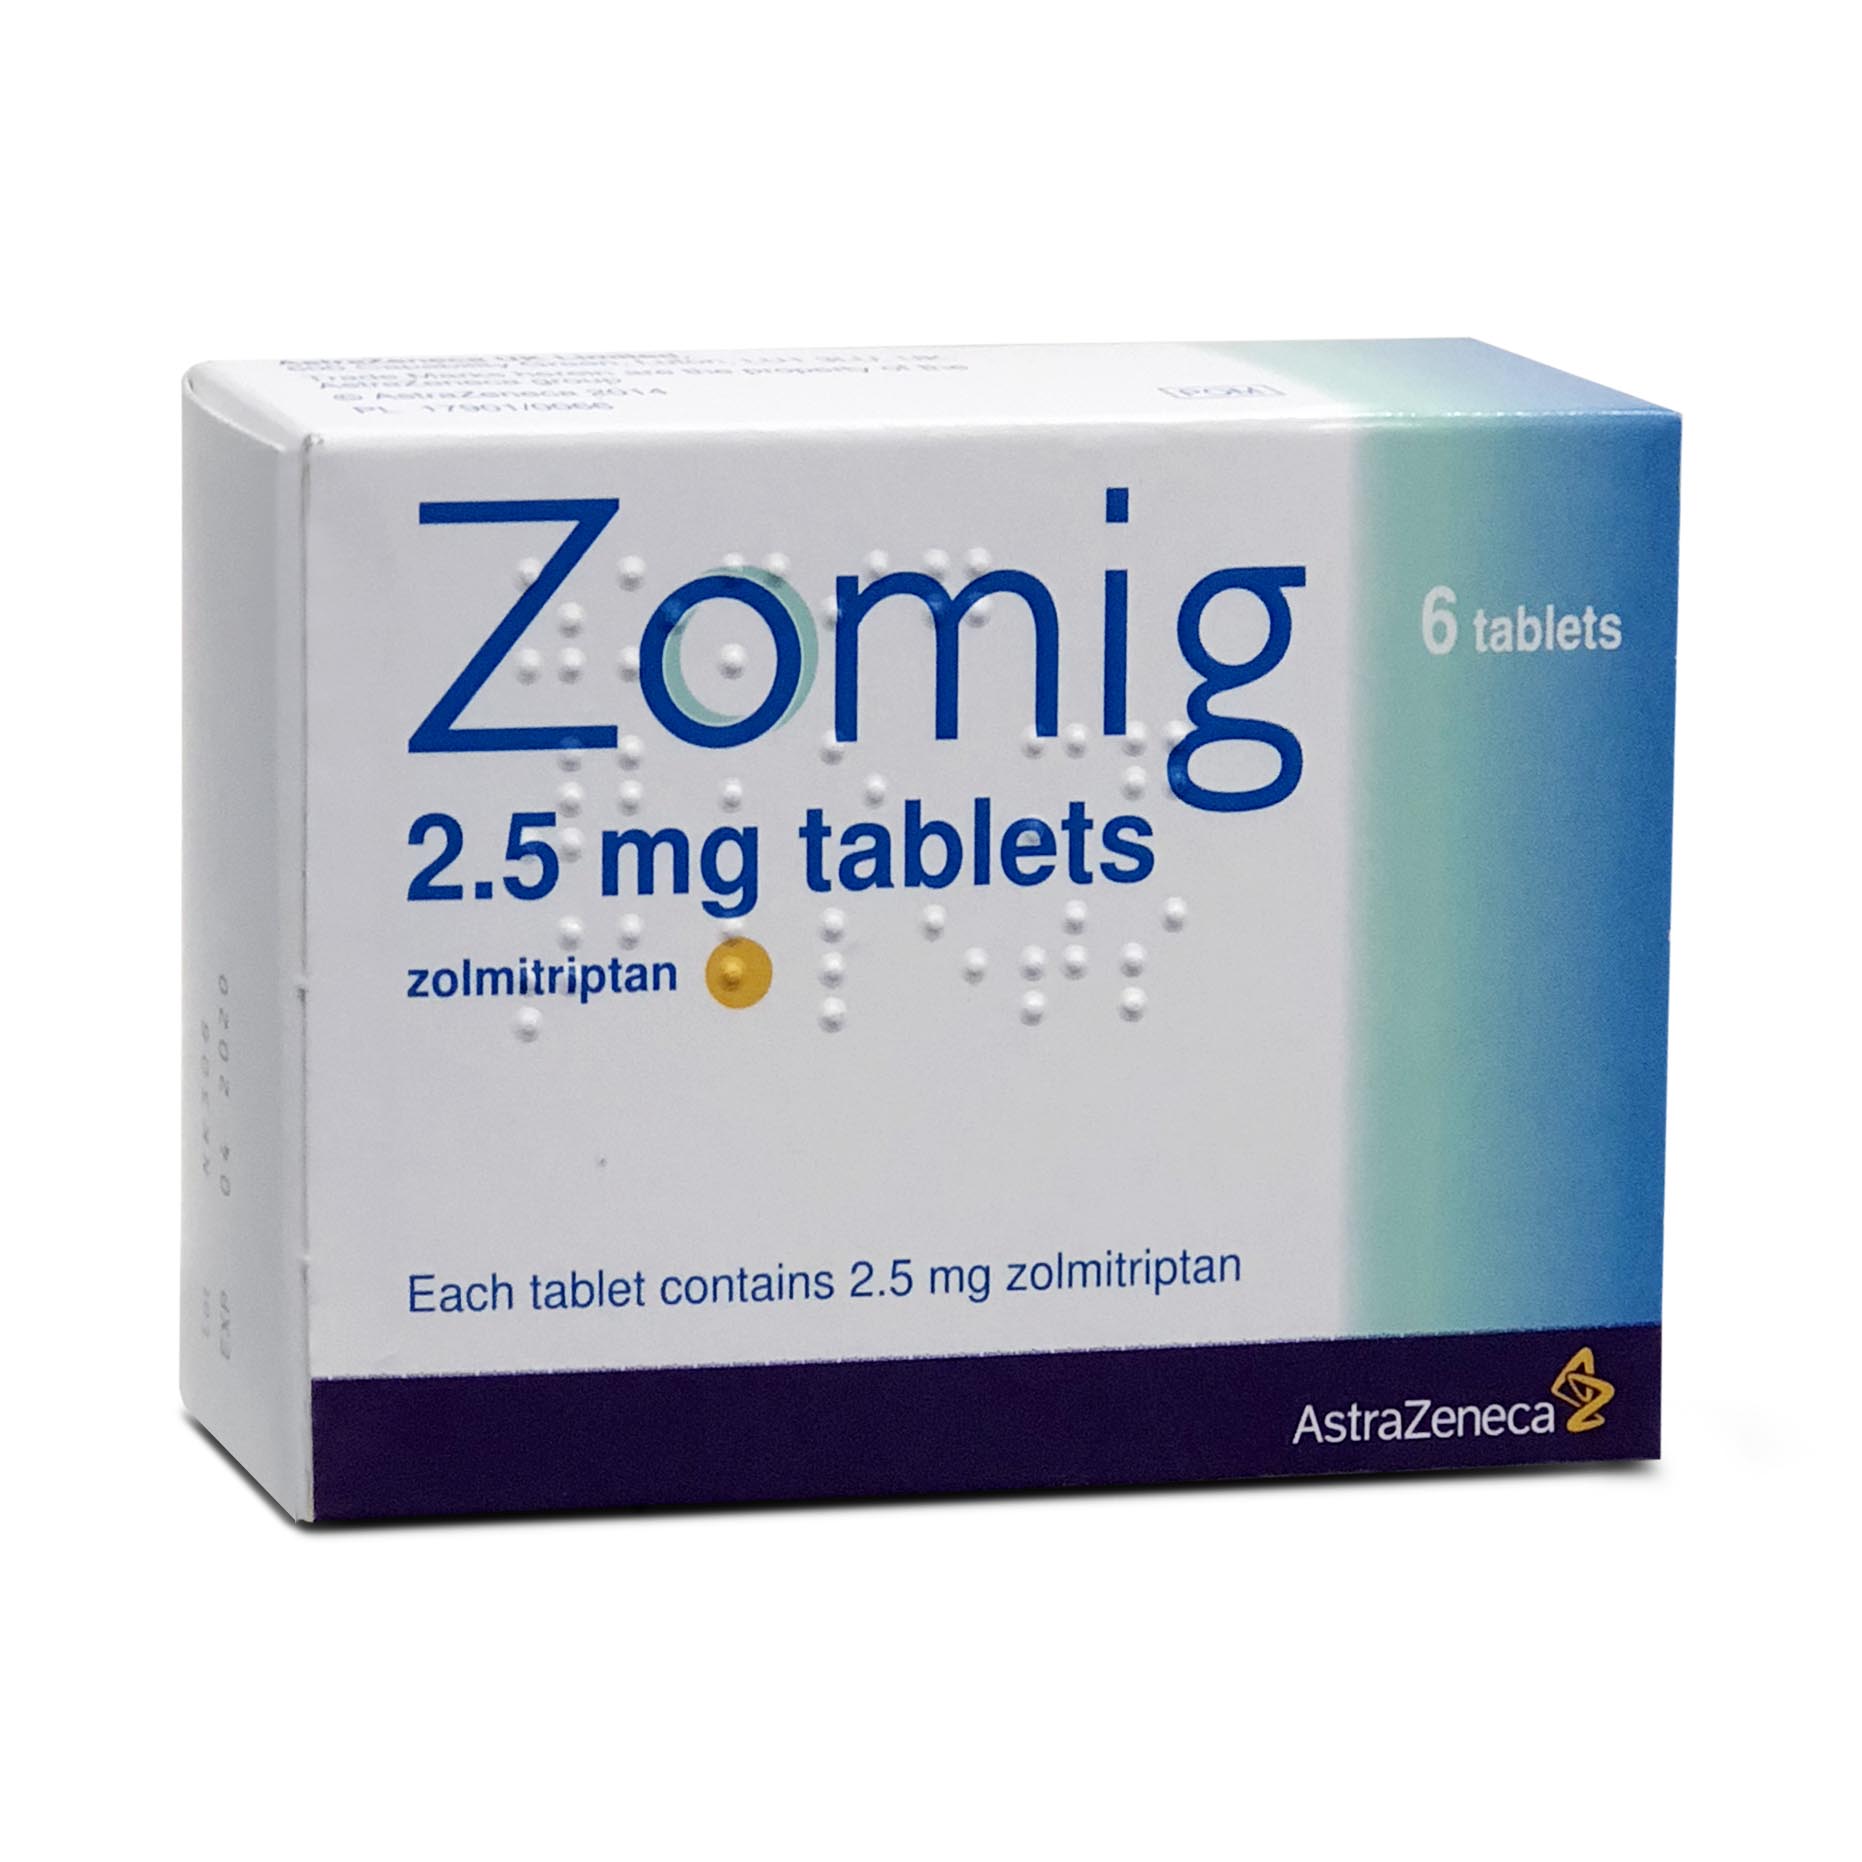 Zomig 2.5 6 tablets AstraZeneca